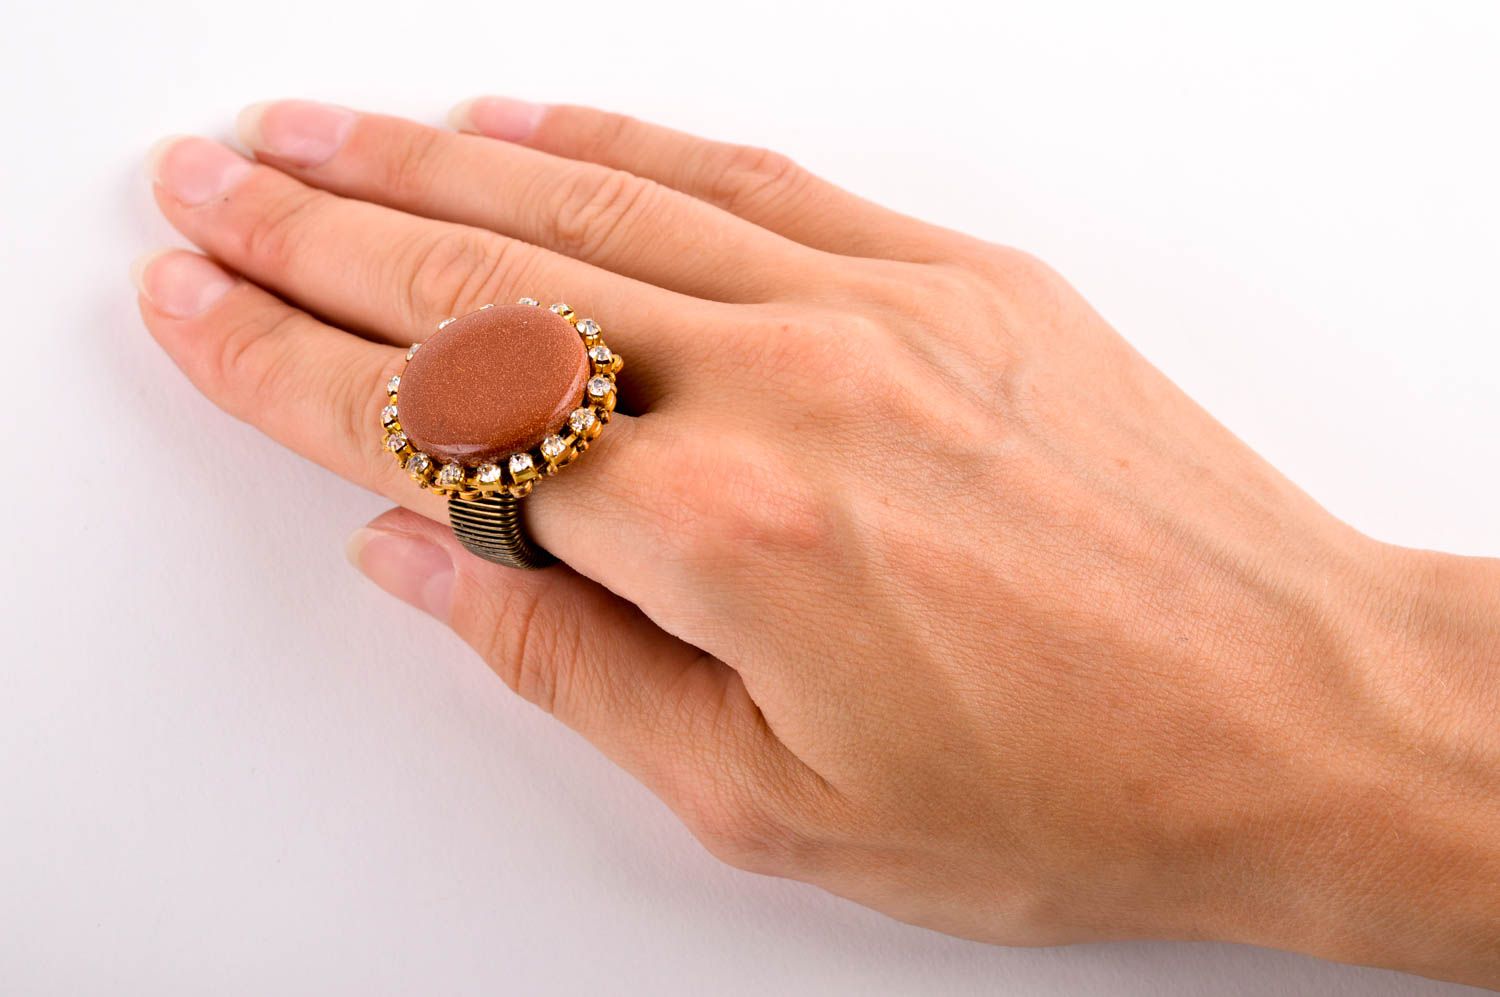 Handmade ring unusual jewelry designer ring with stones gift ideas women jewelry photo 5